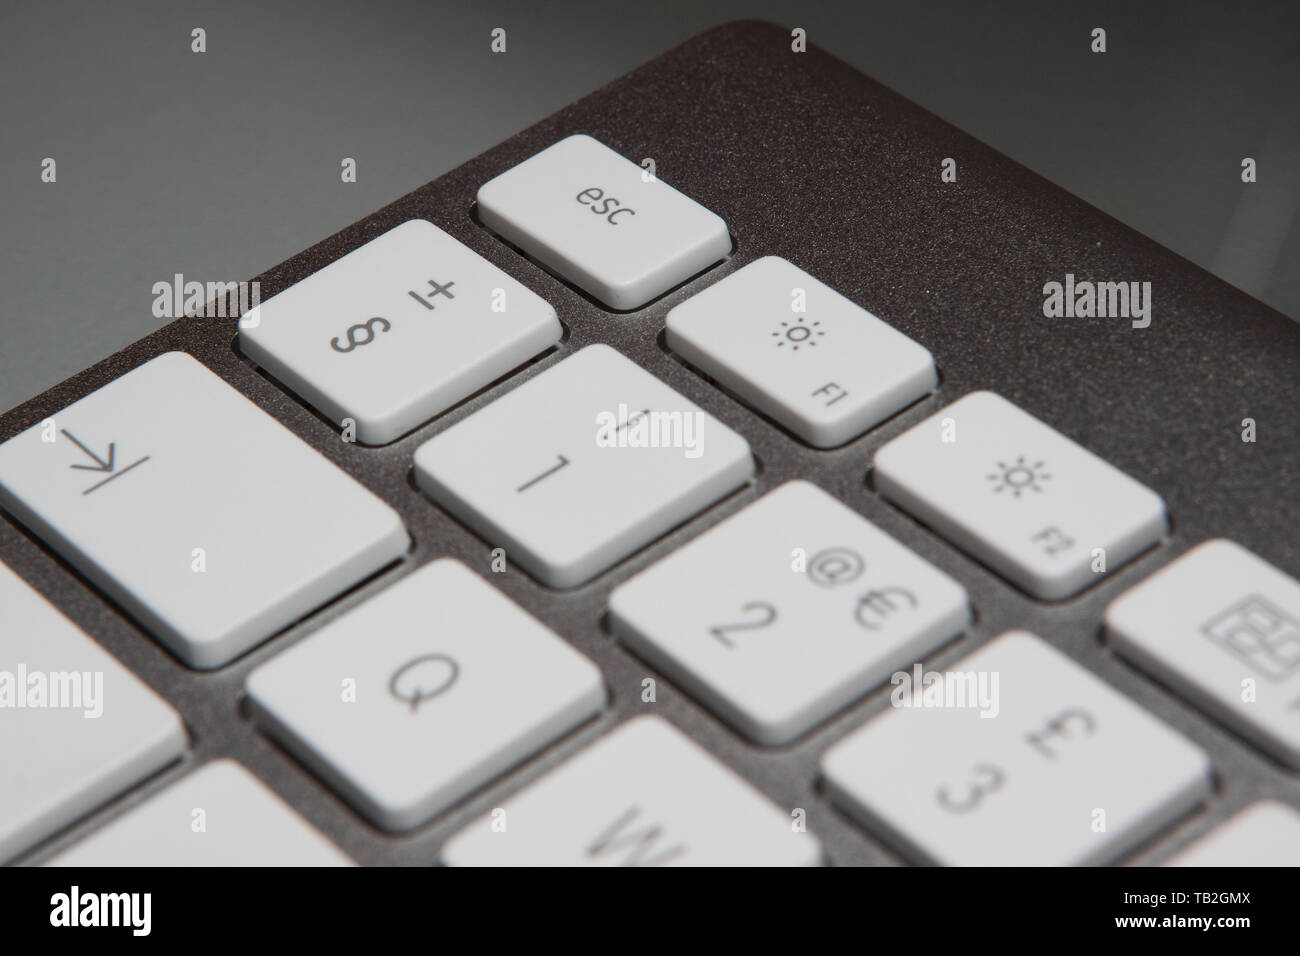 Apple iMac keyboard on an office desk focusing on the escape key. Stock Photo